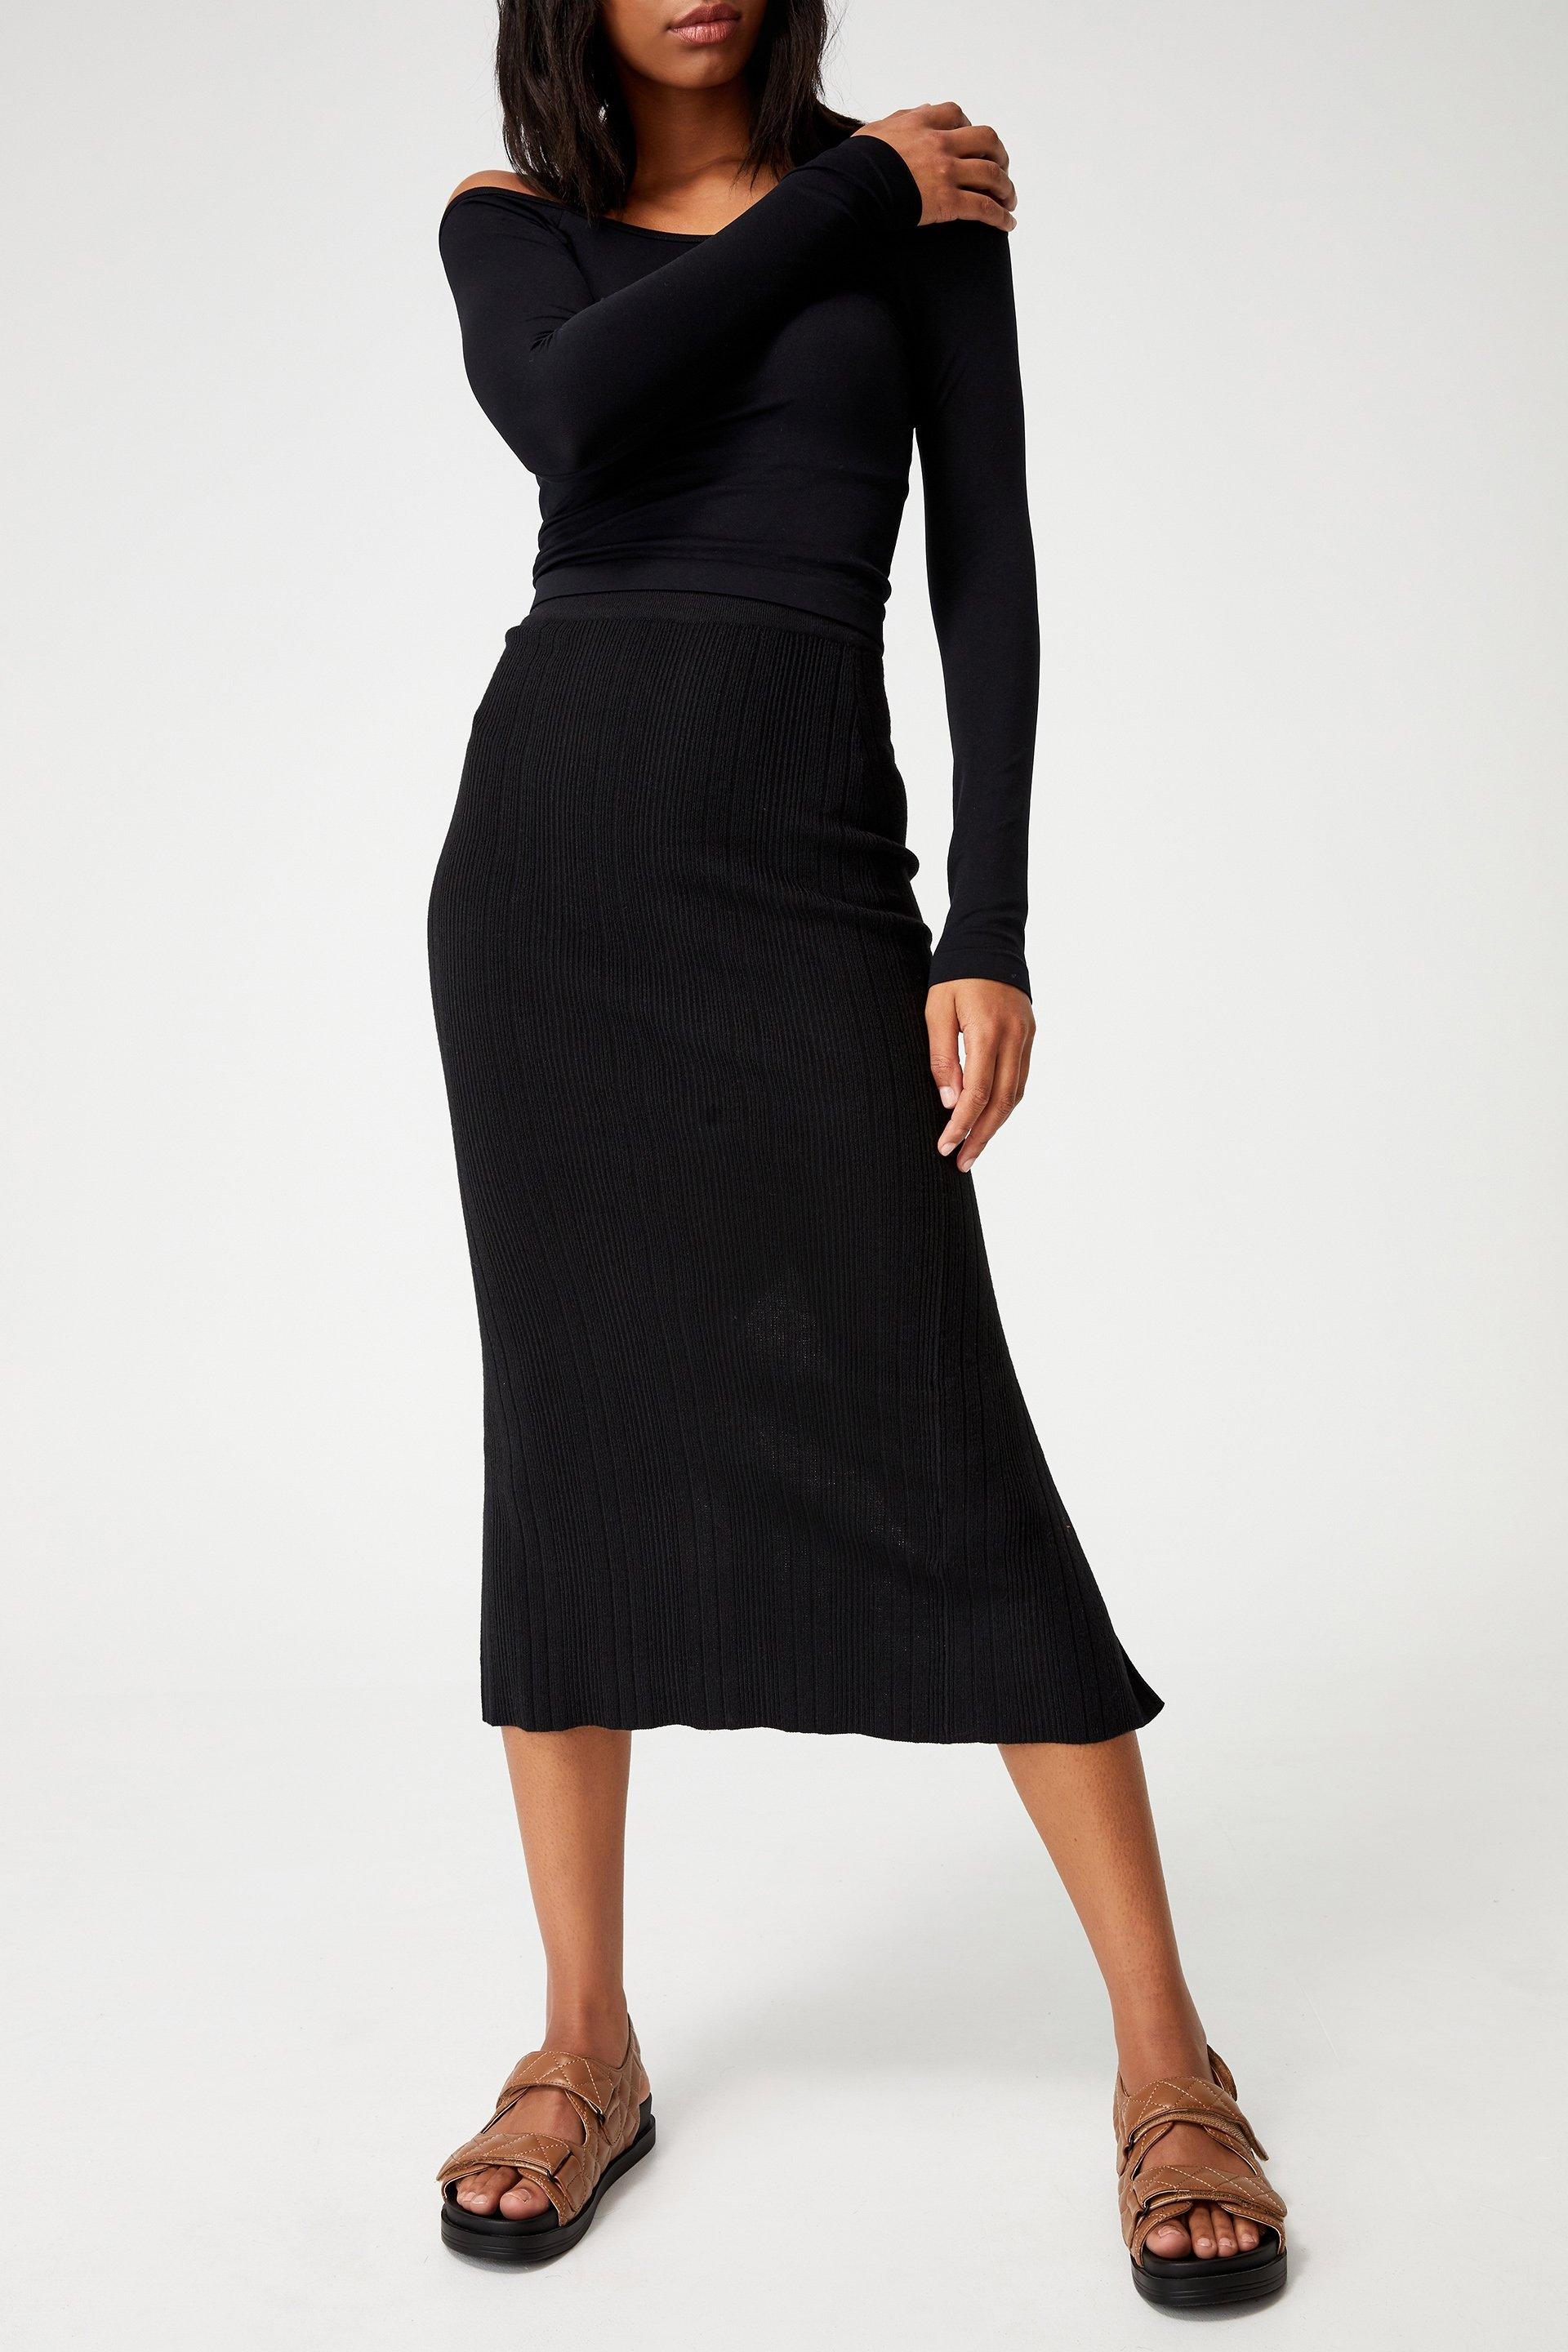 Ultimate knit midi skirt black Cotton On Skirts